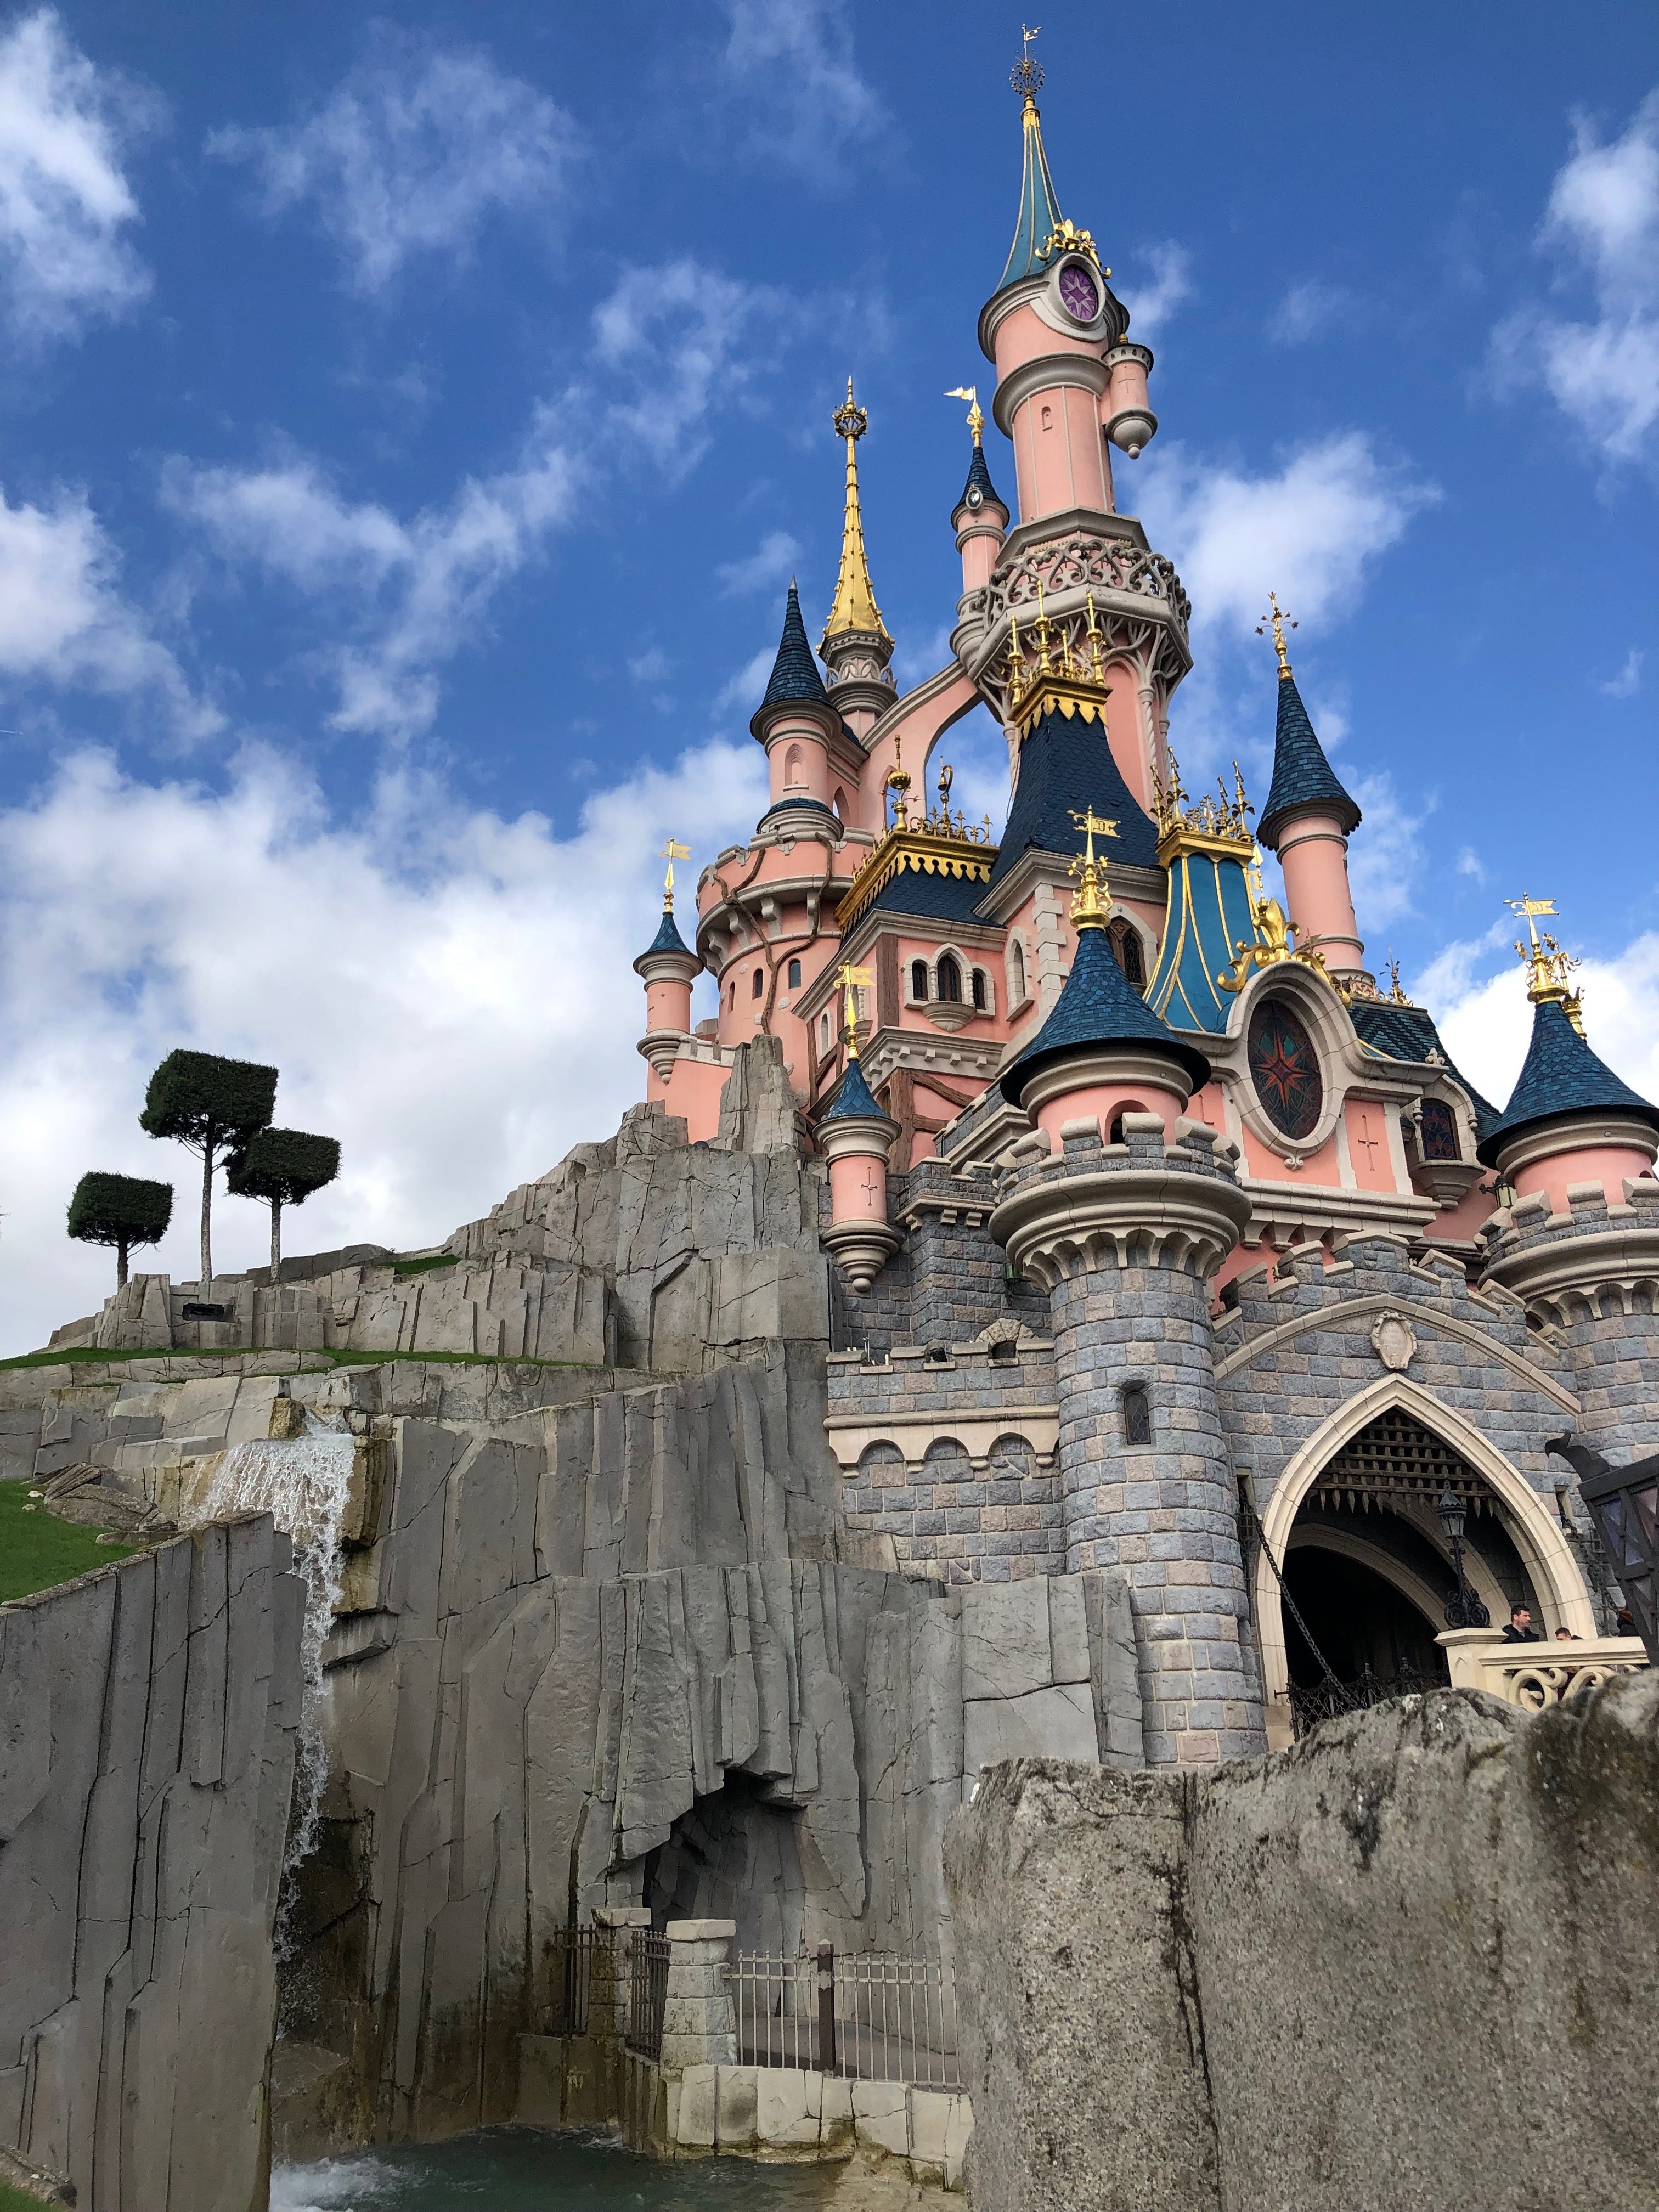 List of Ongoing Renovations at Disneyland Paris